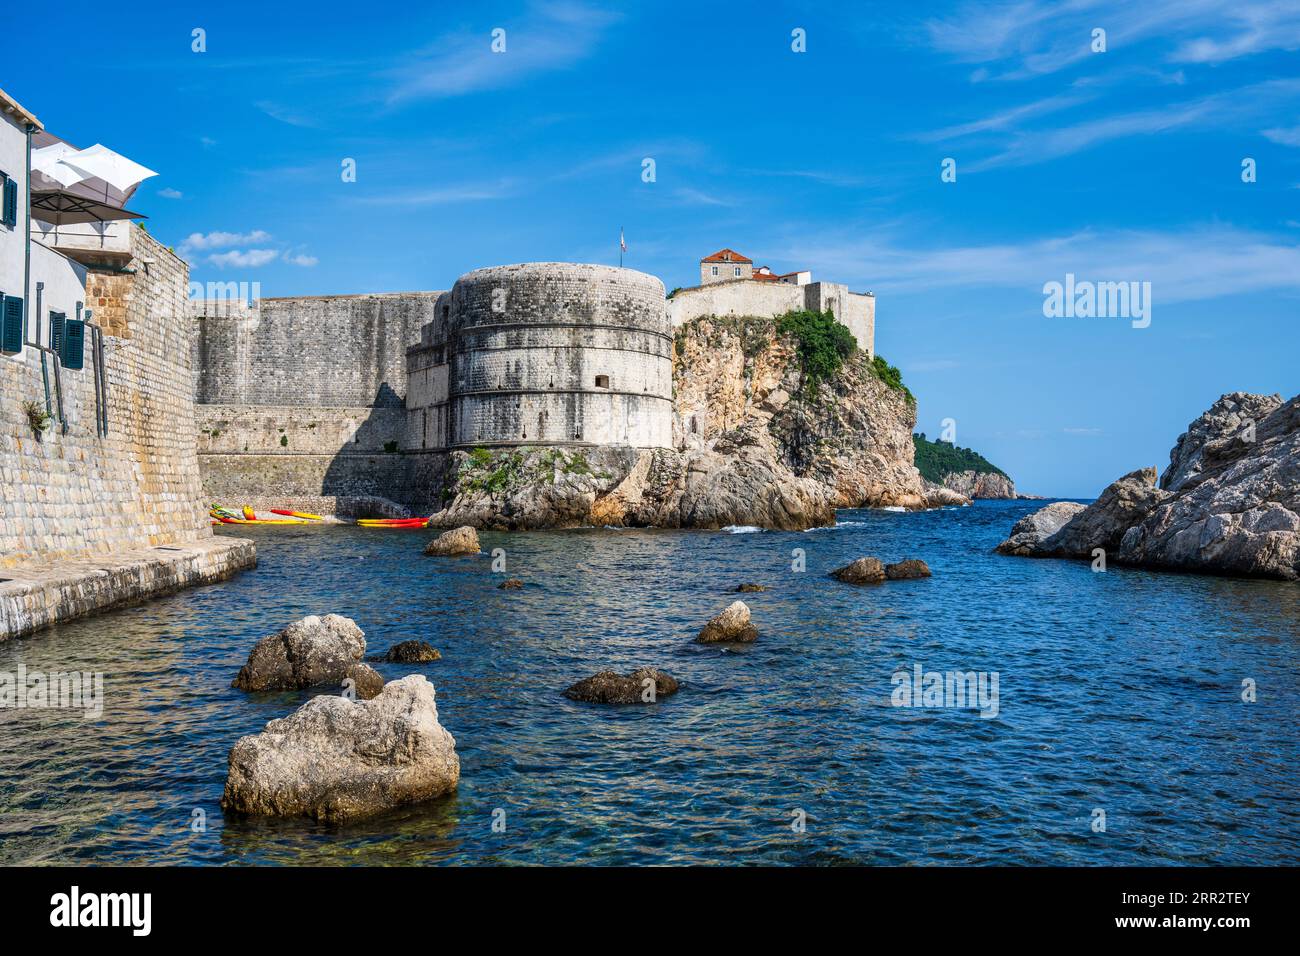 Kolorina Bay with the imposing backdrop of Fort Bokar (Tvrdava Bokar) in the old walled city of Dubrovnik on the Dalmatian Coast of Croatia Stock Photo